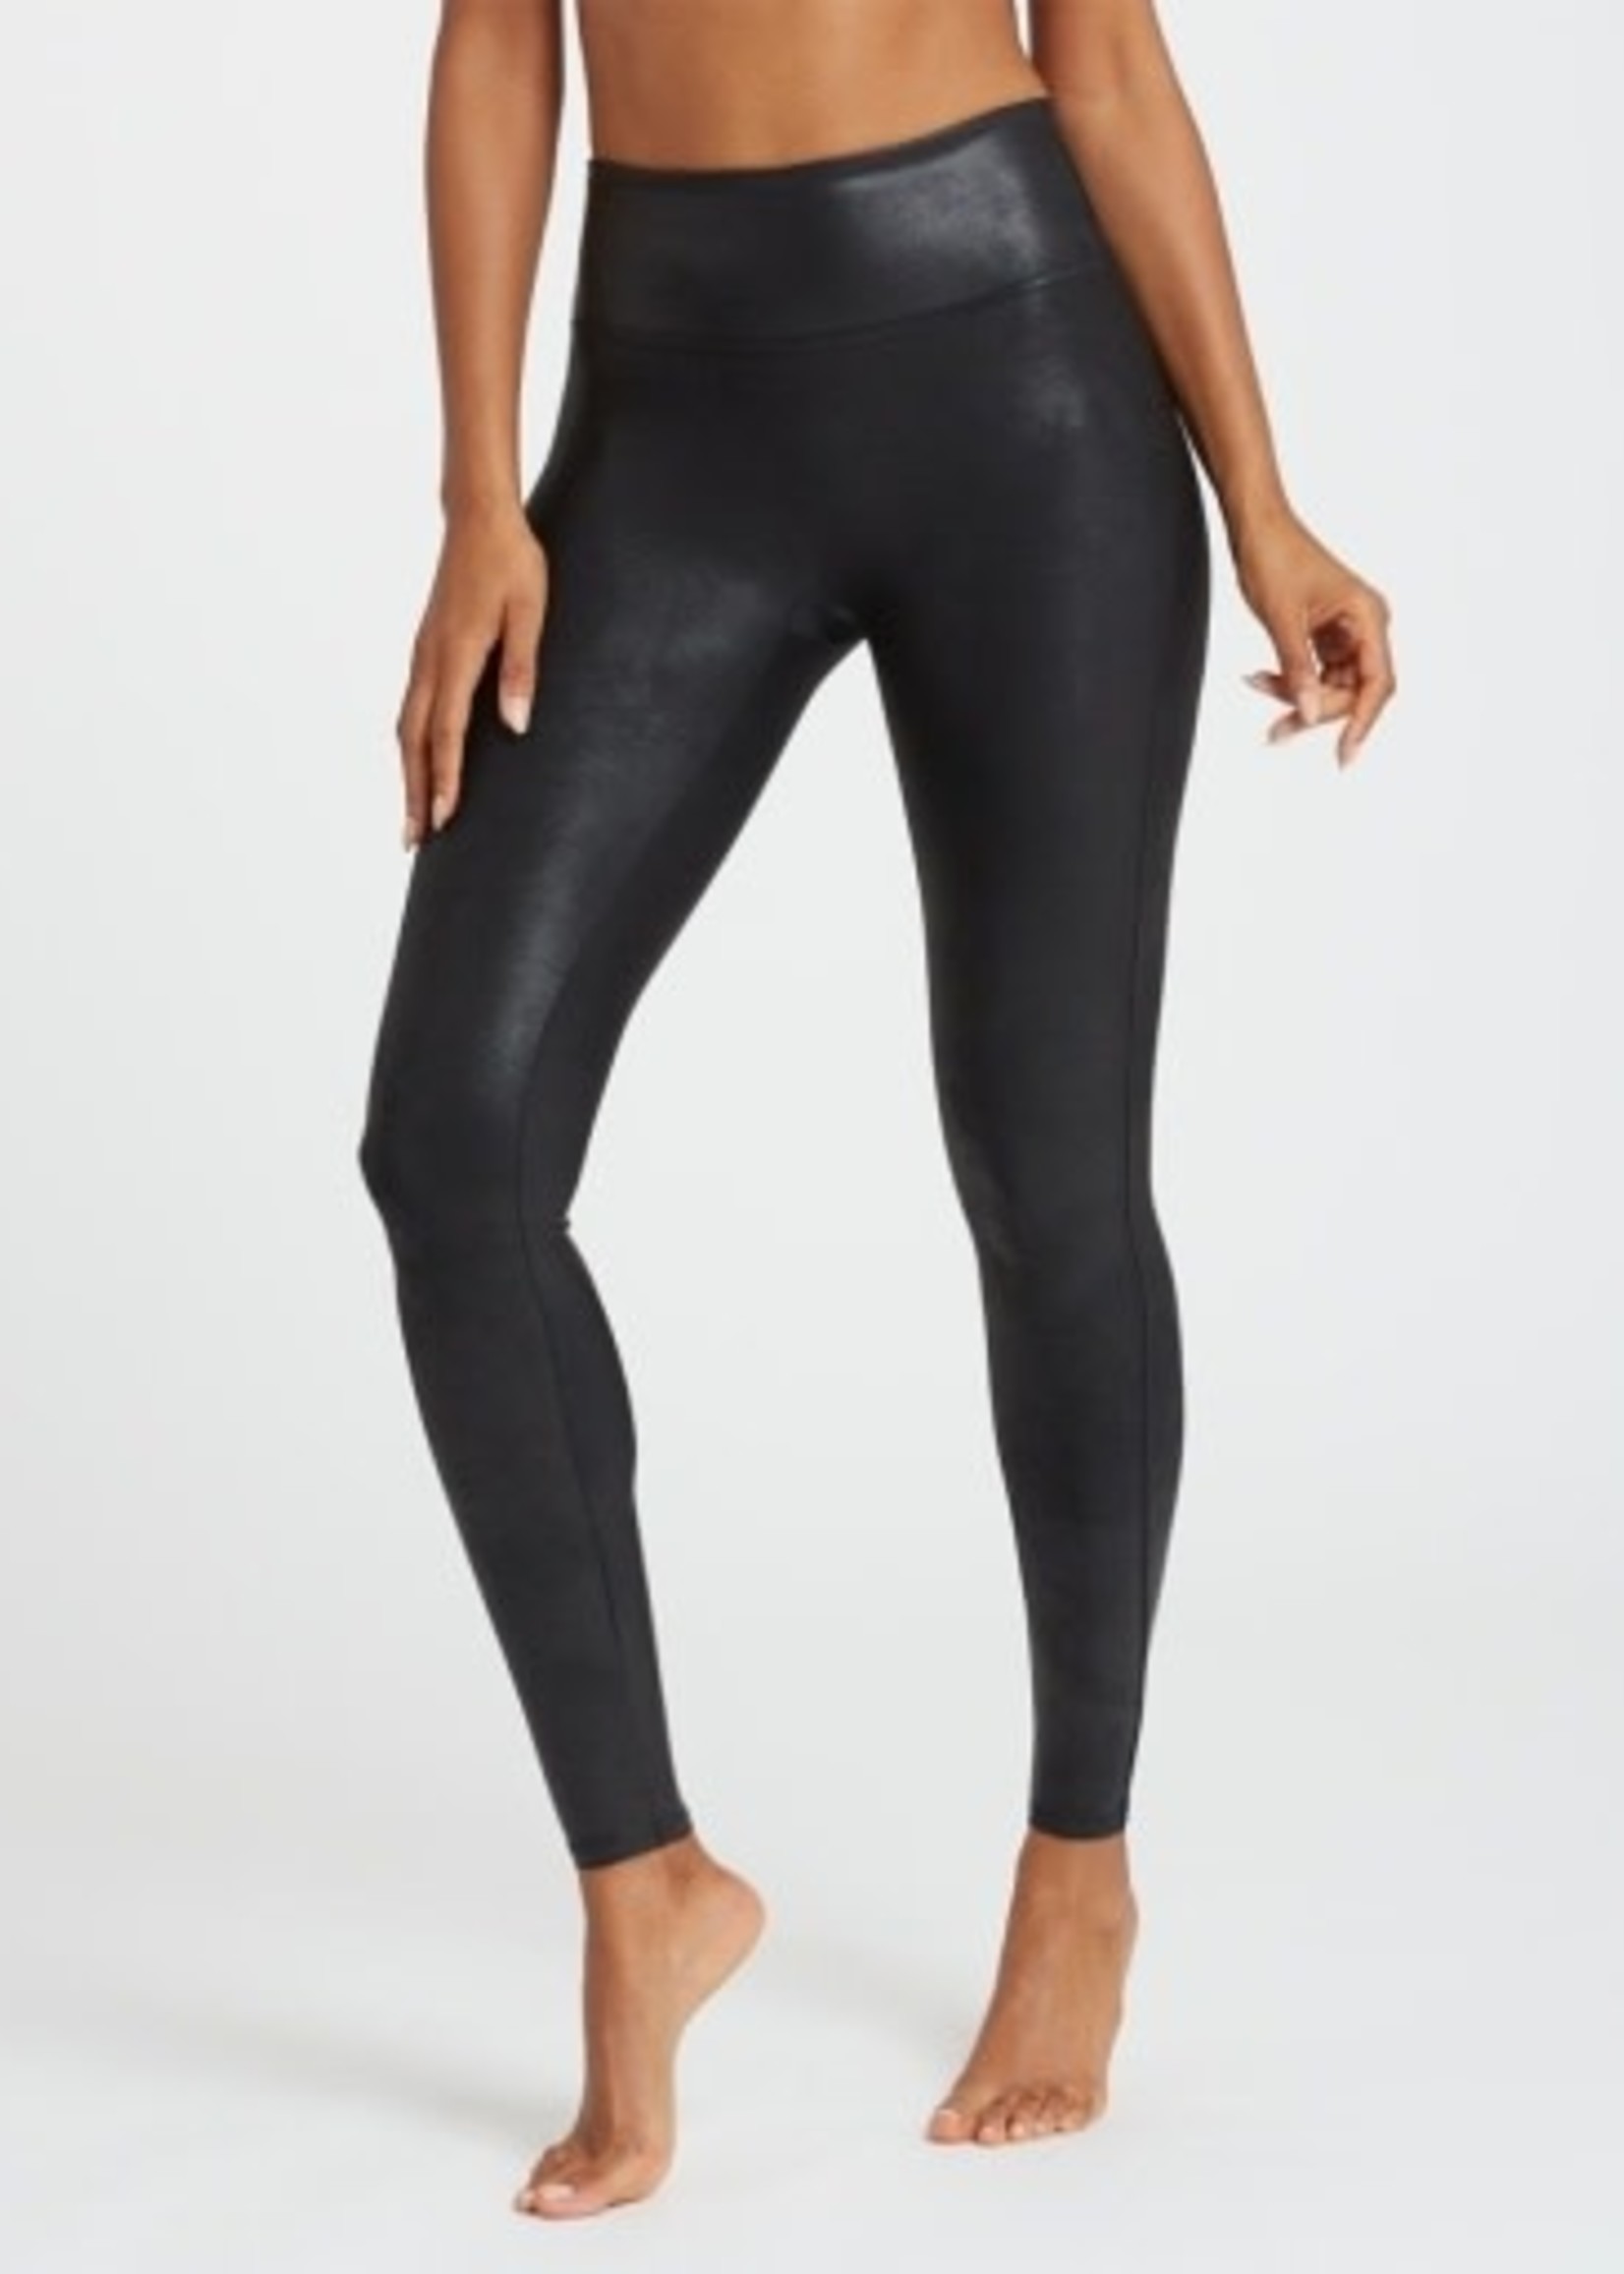 Women's Stretchy High Waisted Tummy Control Faux Leather Pleather Yoga  Leggings | eBay